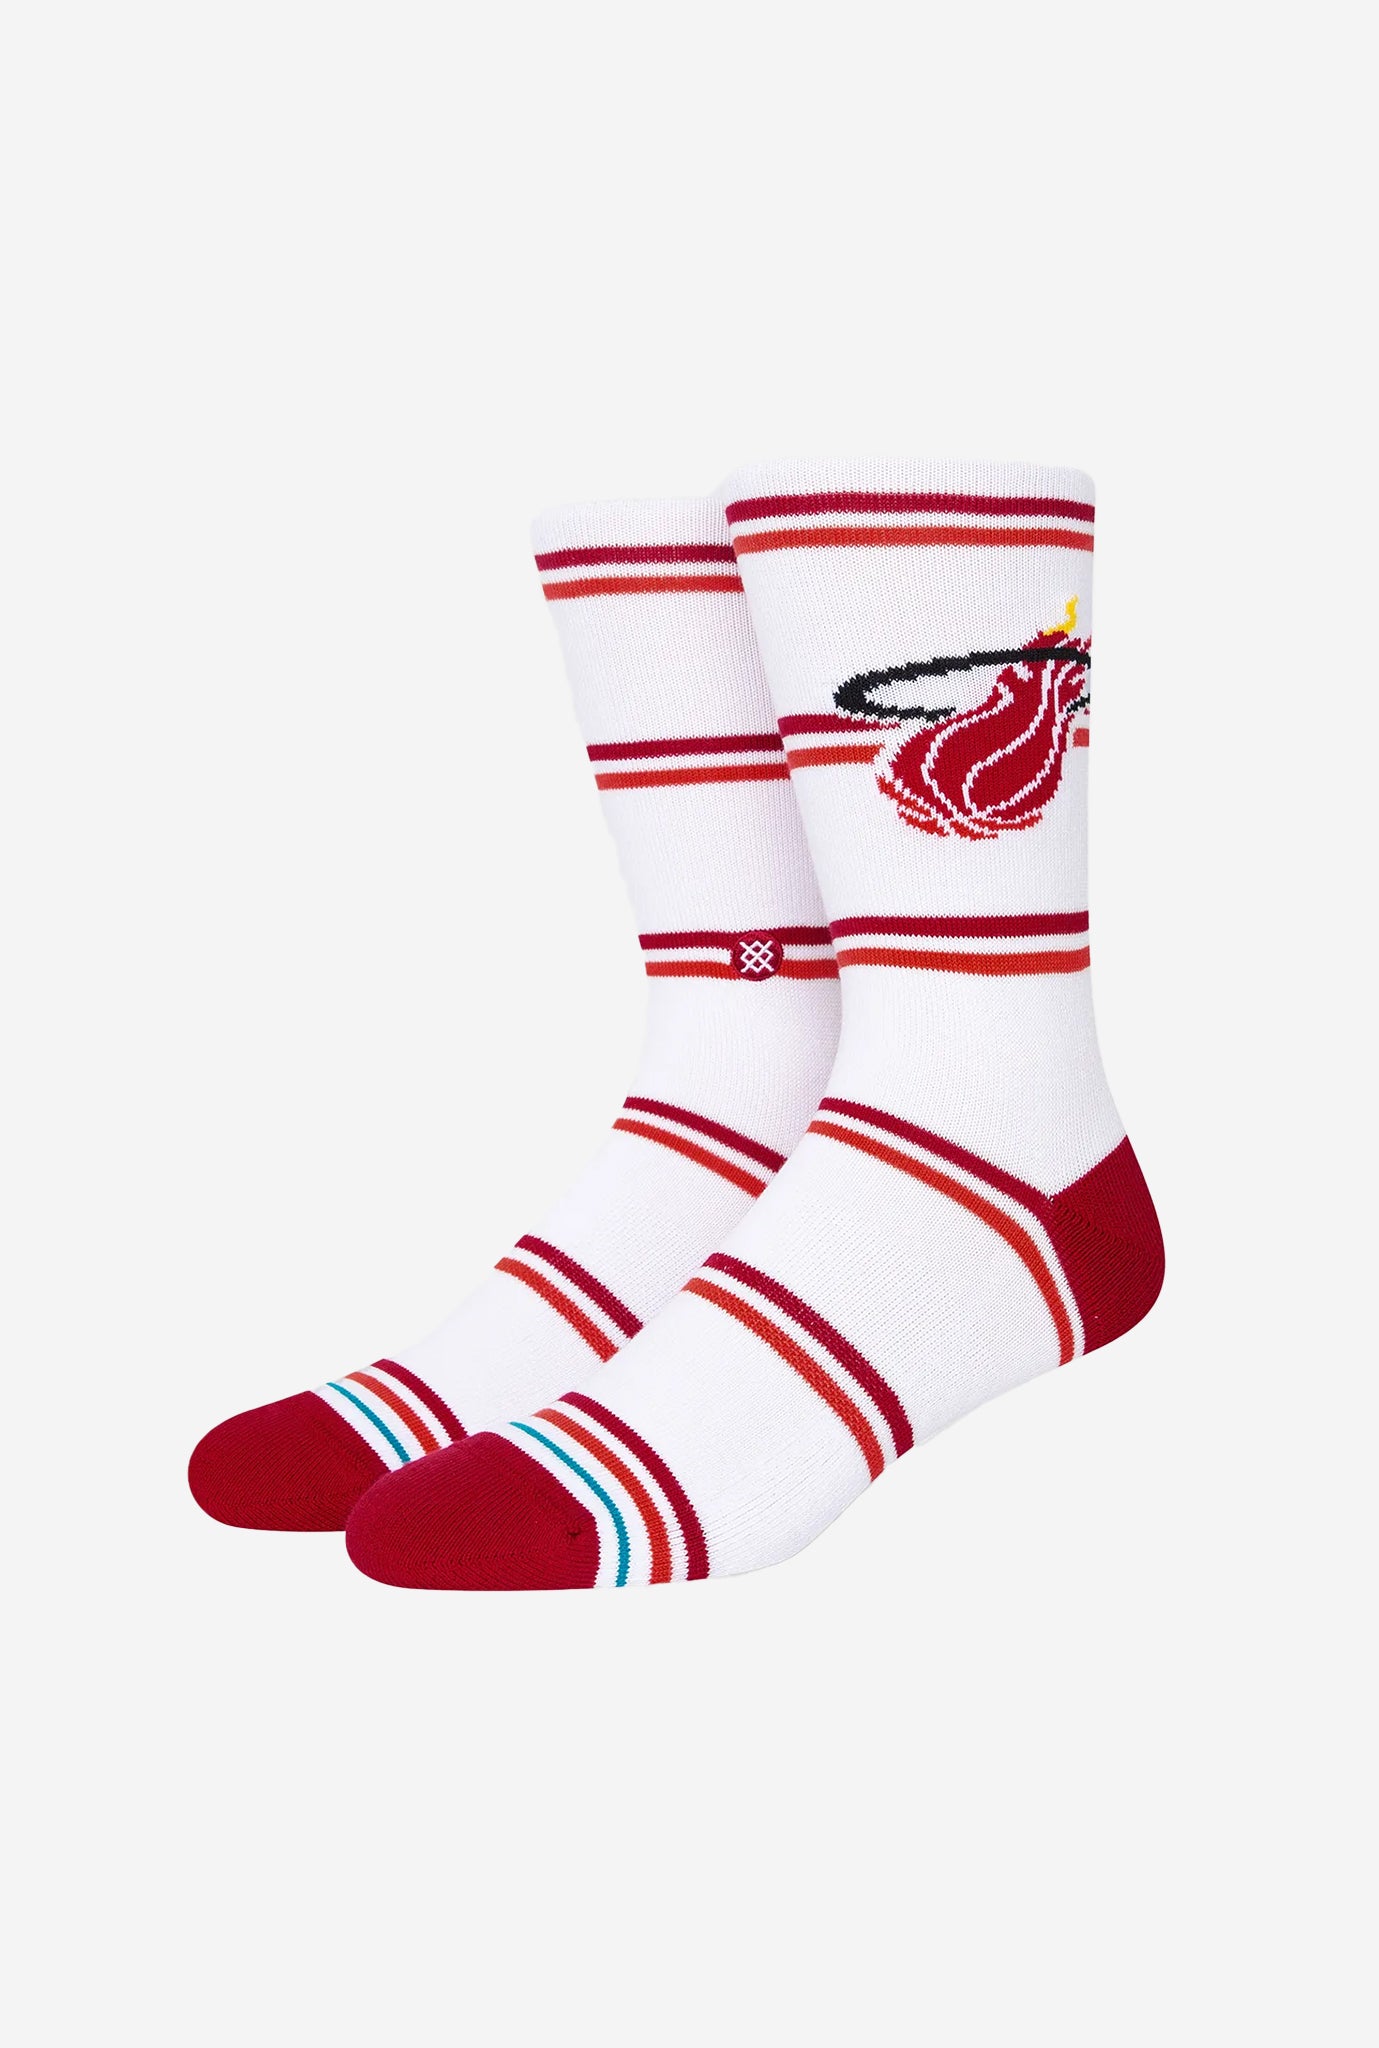 Miami Heat Classic Socks - White